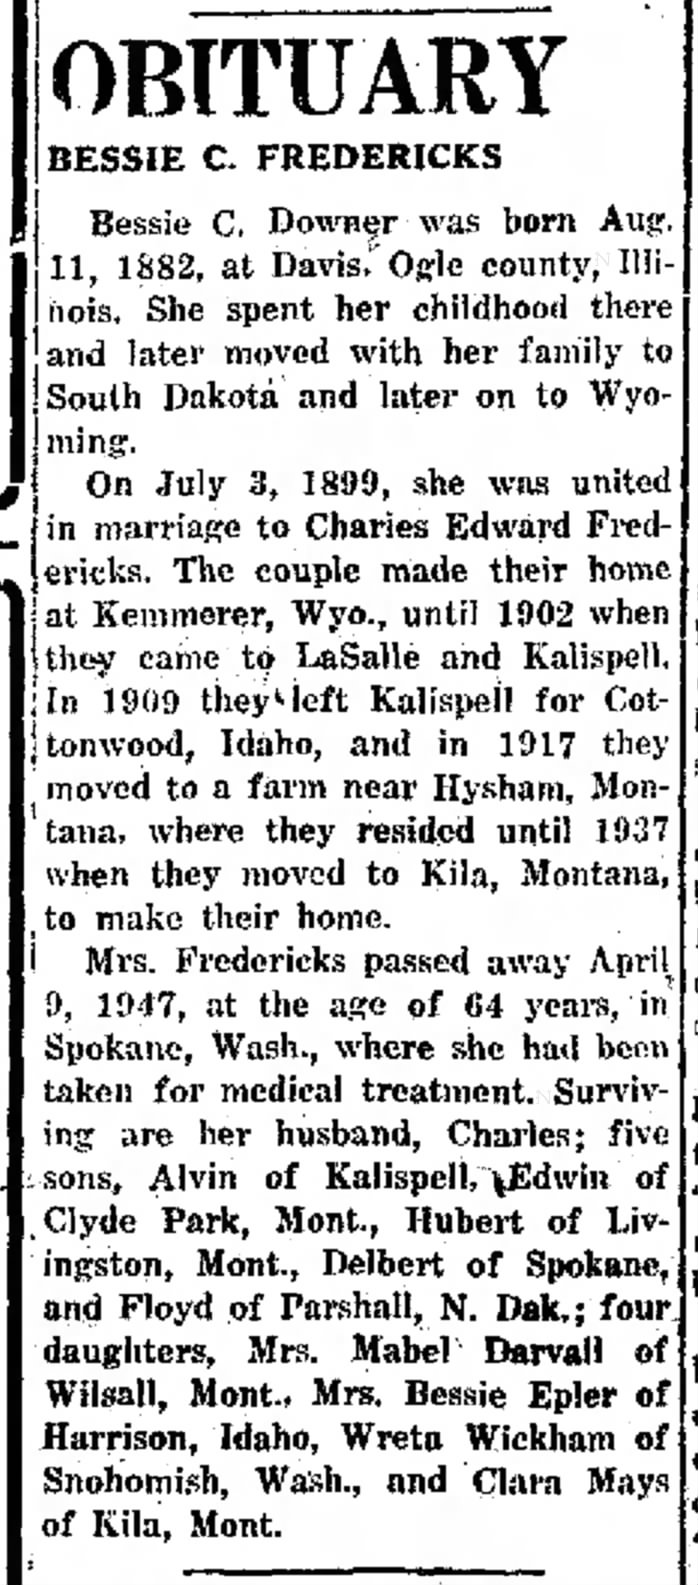 e Daily Inter Lake (Kalispell, Montana)  
 15 April 1947  
 Page 3